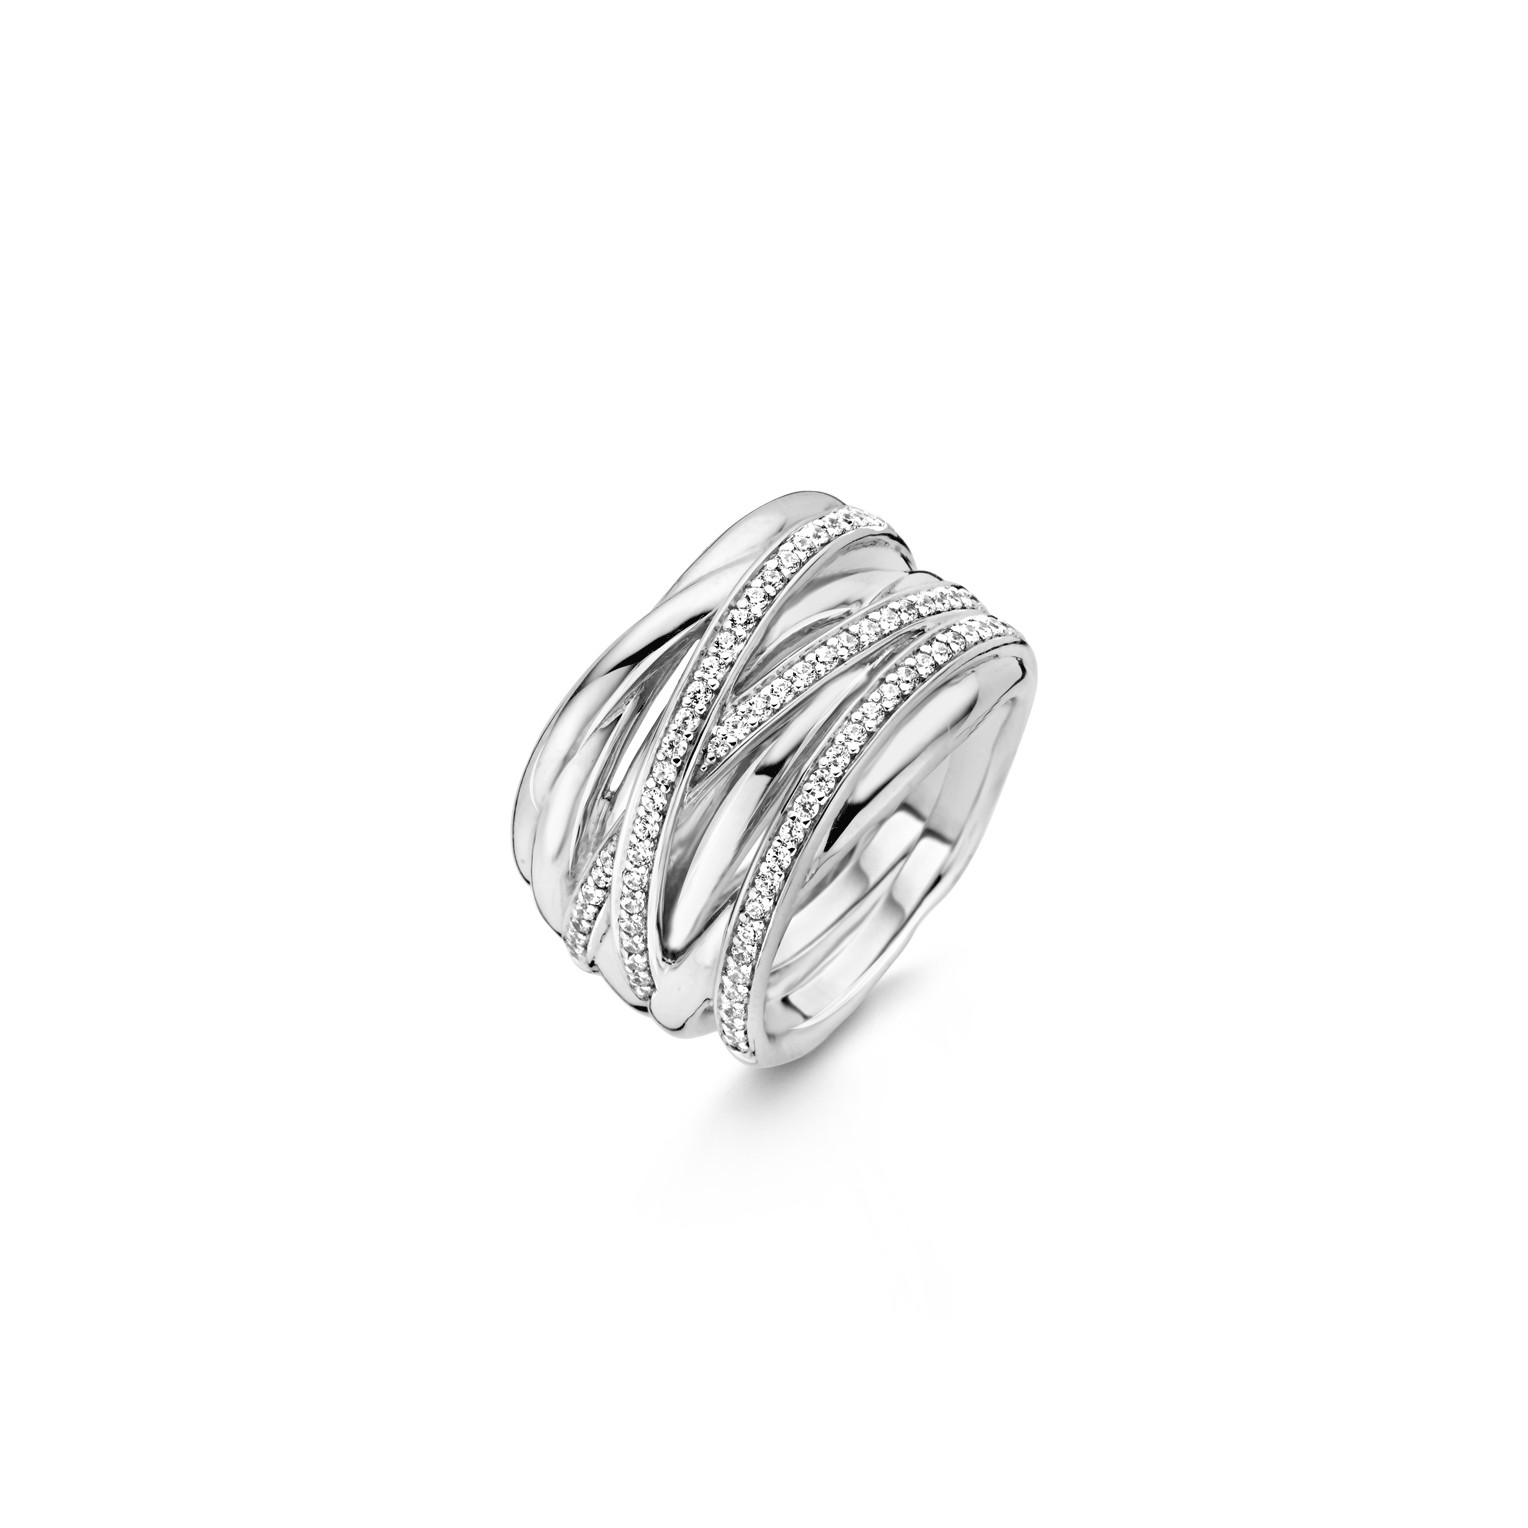 TI SENTO - Milano Ring 12067ZI Gala Jewelers Inc. White Oak, PA